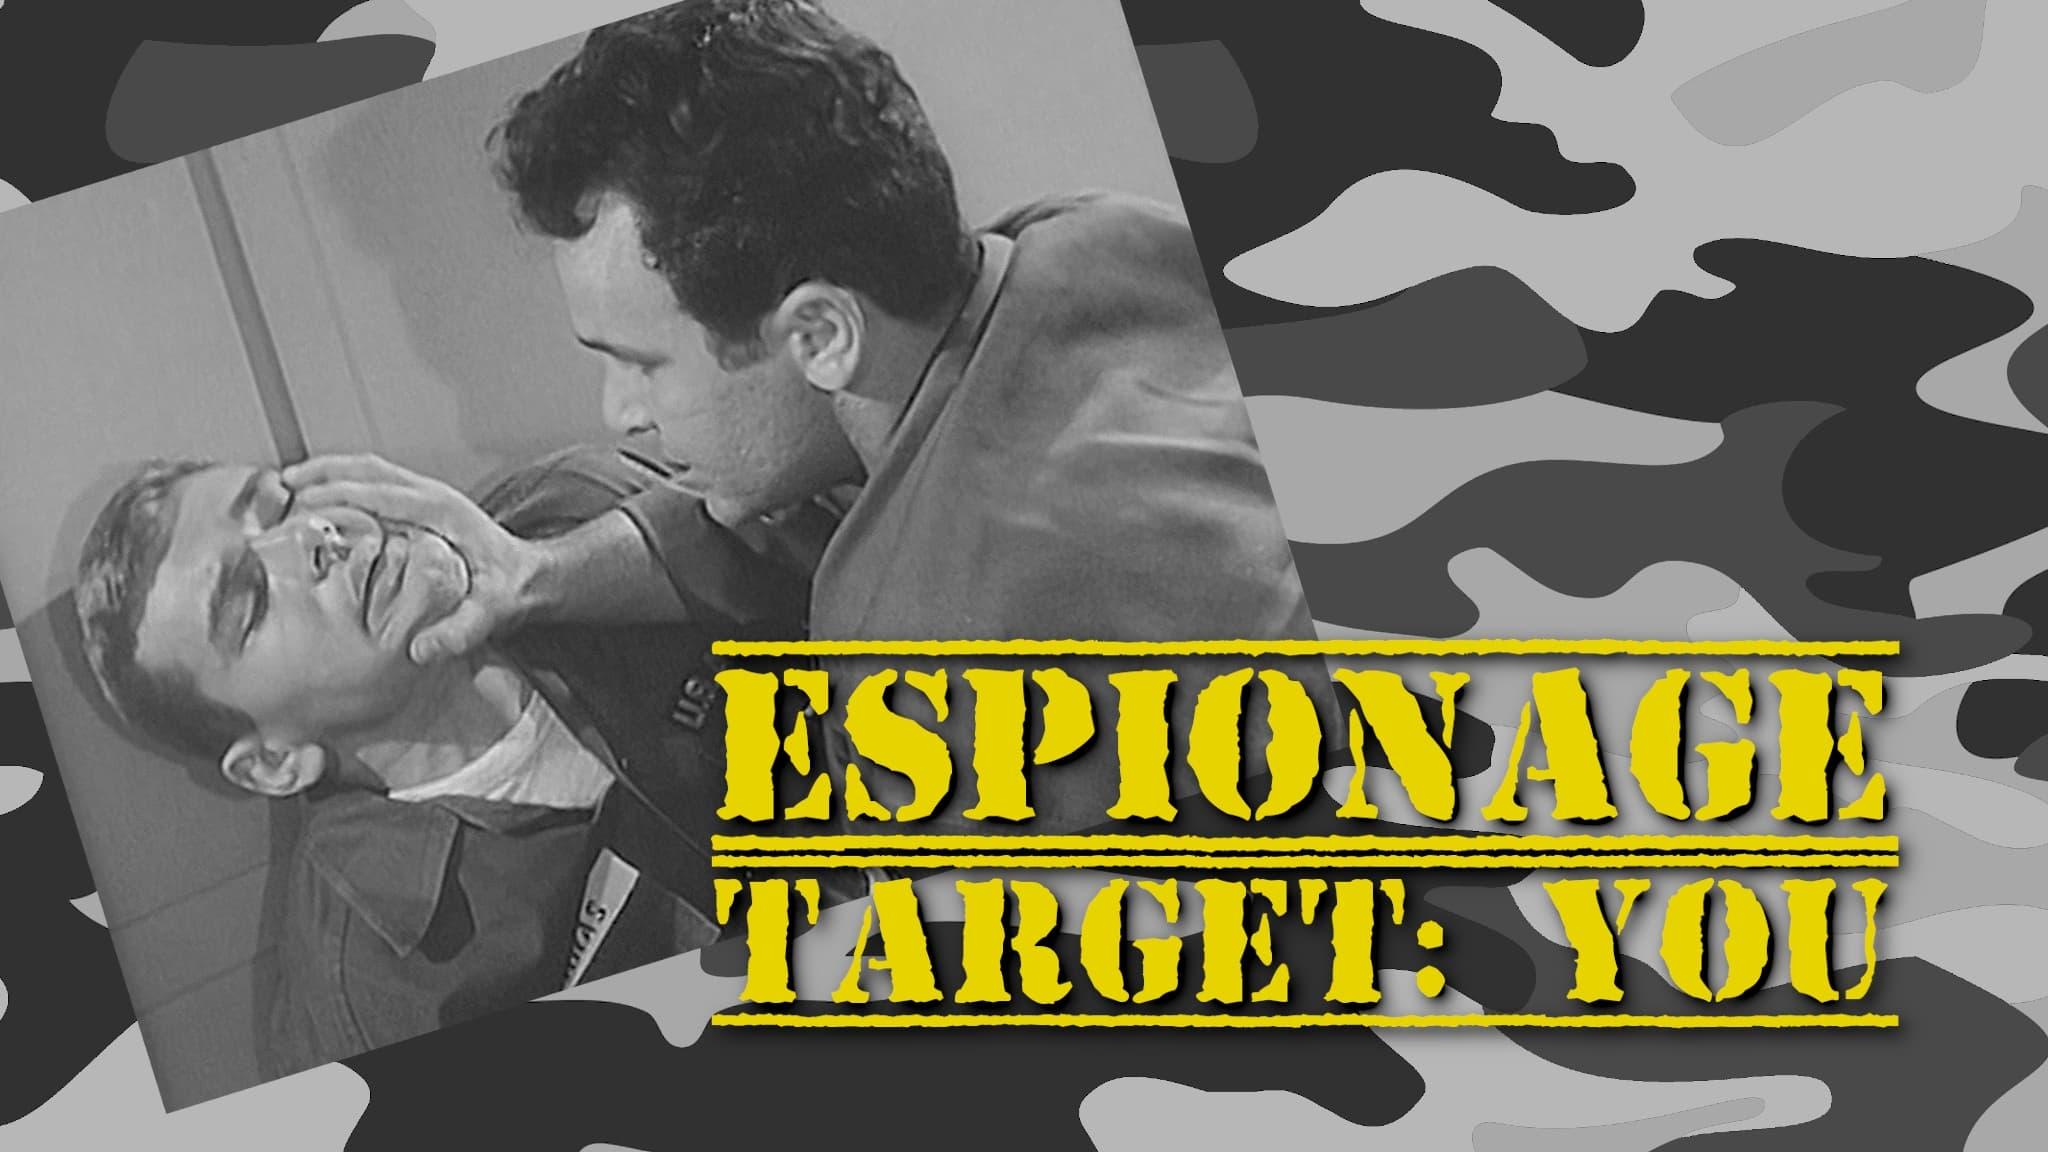 Espionage Target: You backdrop